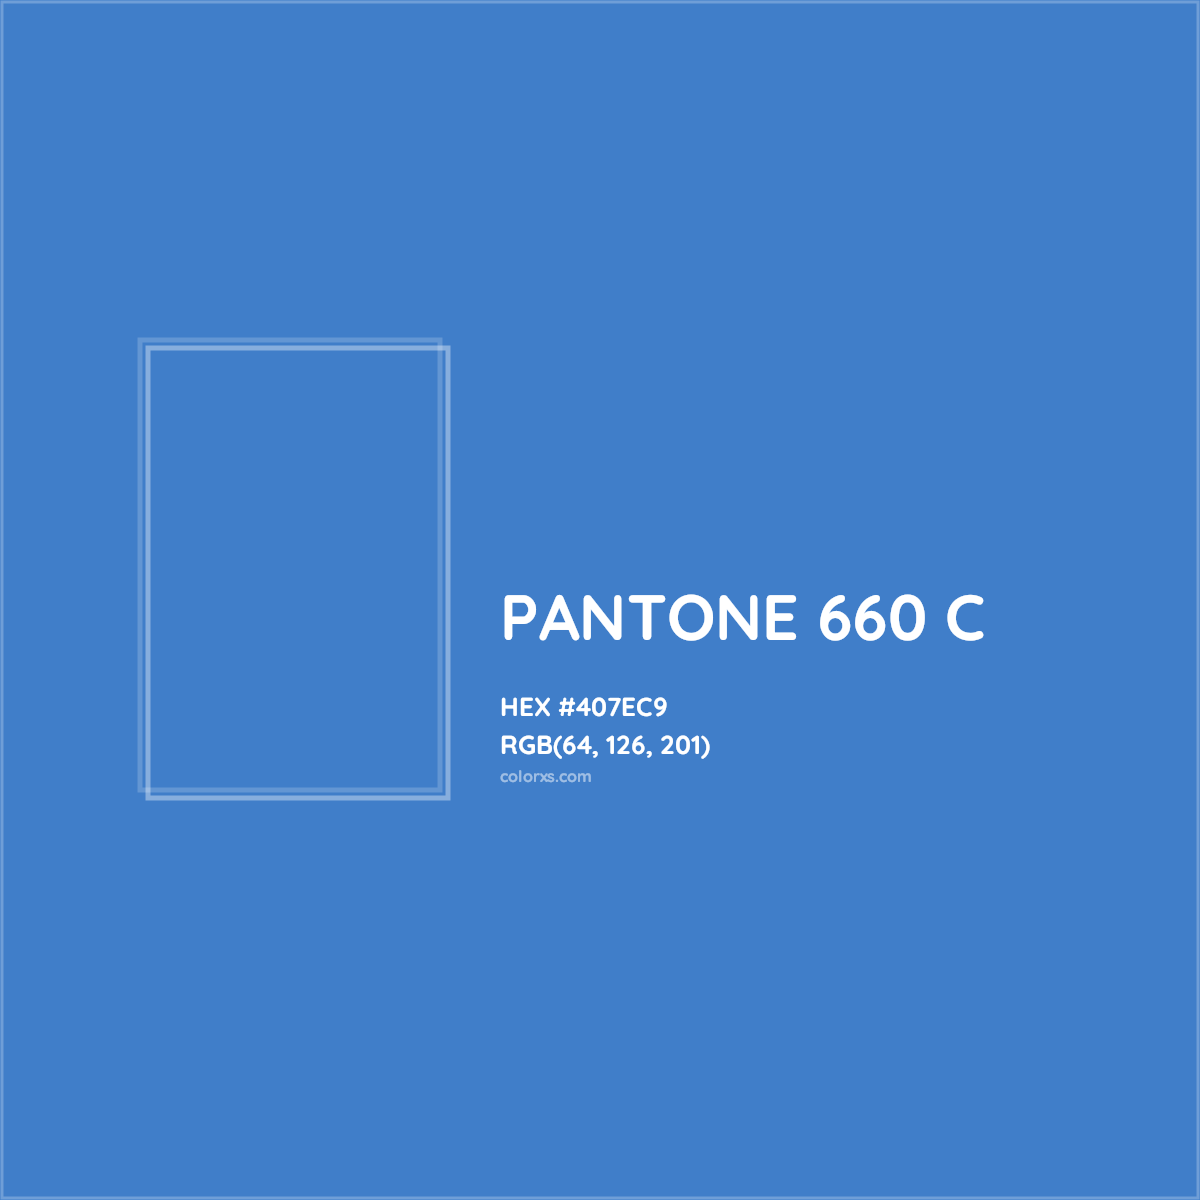 HEX #407EC9 PANTONE 660 C CMS Pantone PMS - Color Code